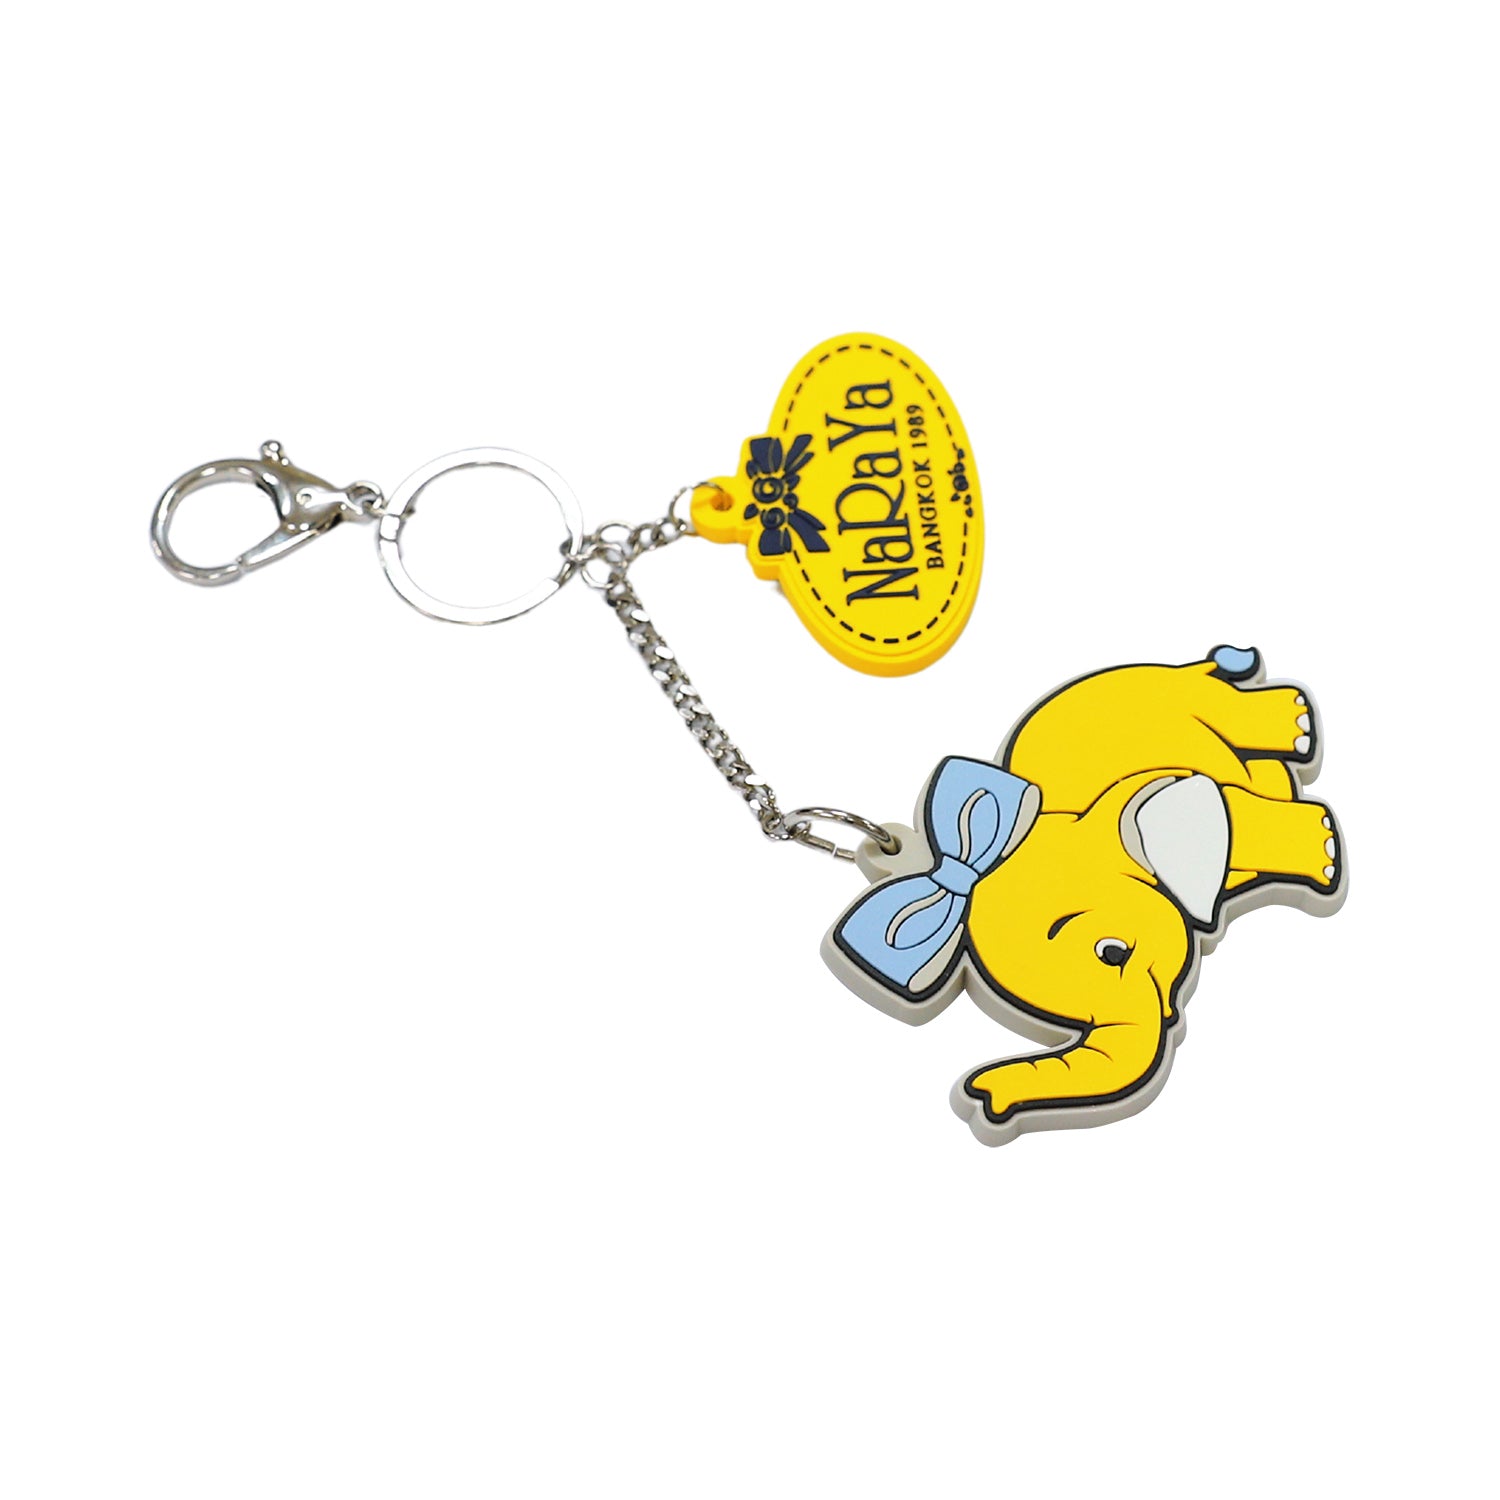 NaRaYa Little Elephant with NaRaYa Logo Keychain